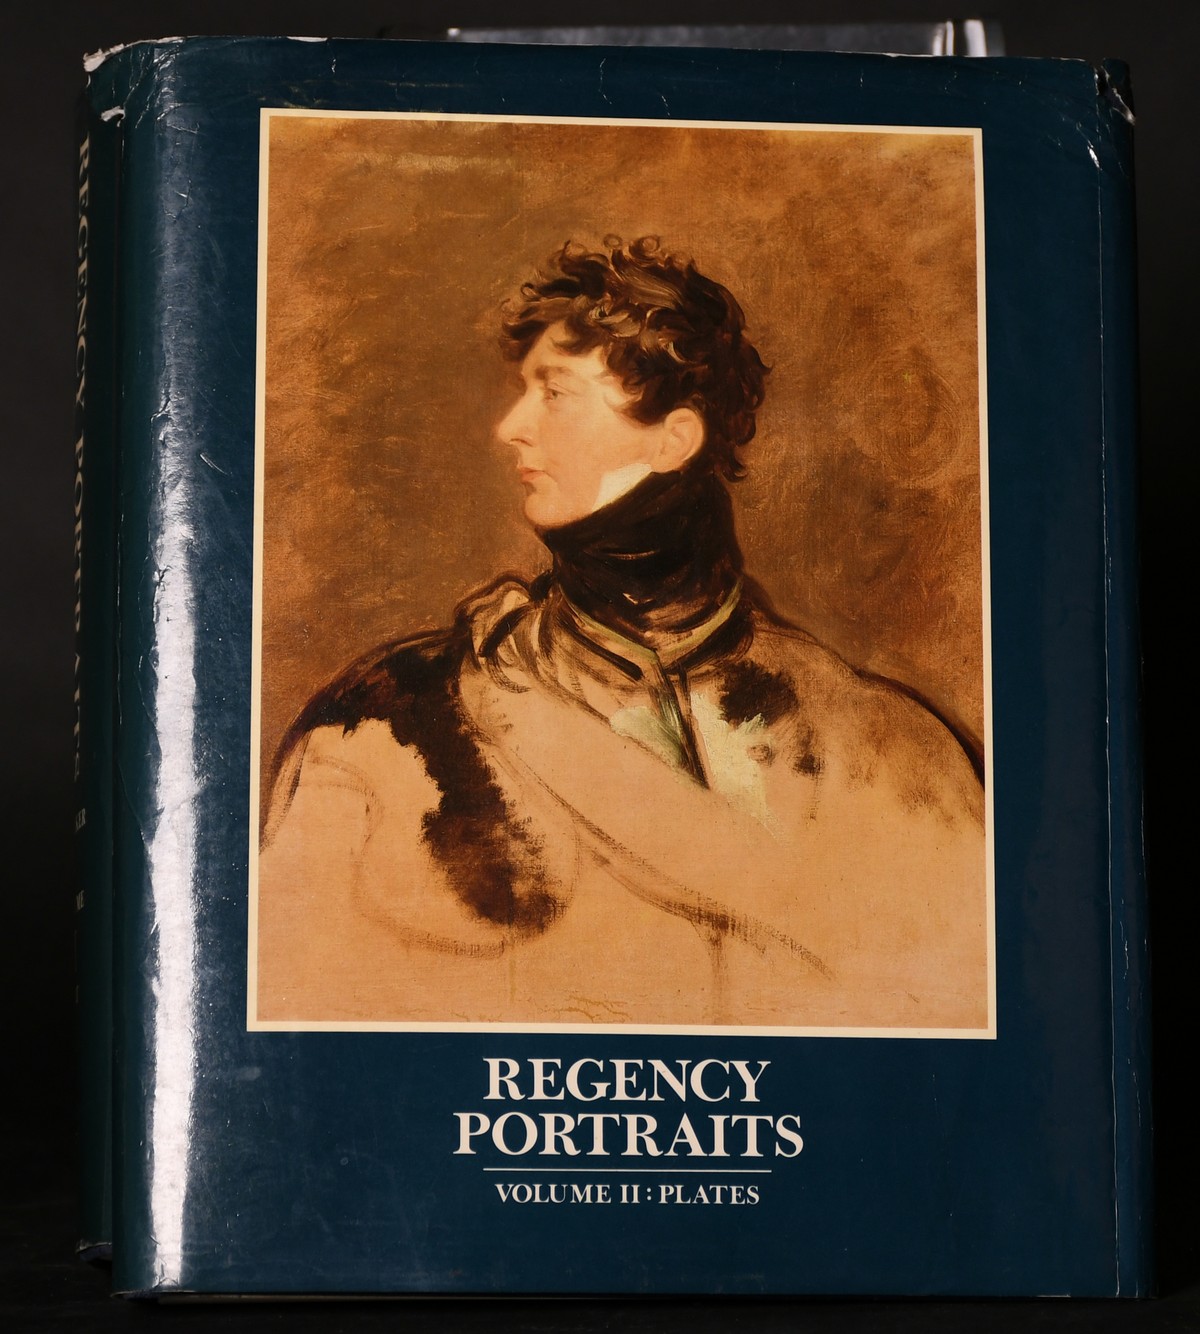 'REGENCY PORTRAITS'. Vols. 1-2. By The National Portrait Gallery 1985. Edited by Richard Walker.